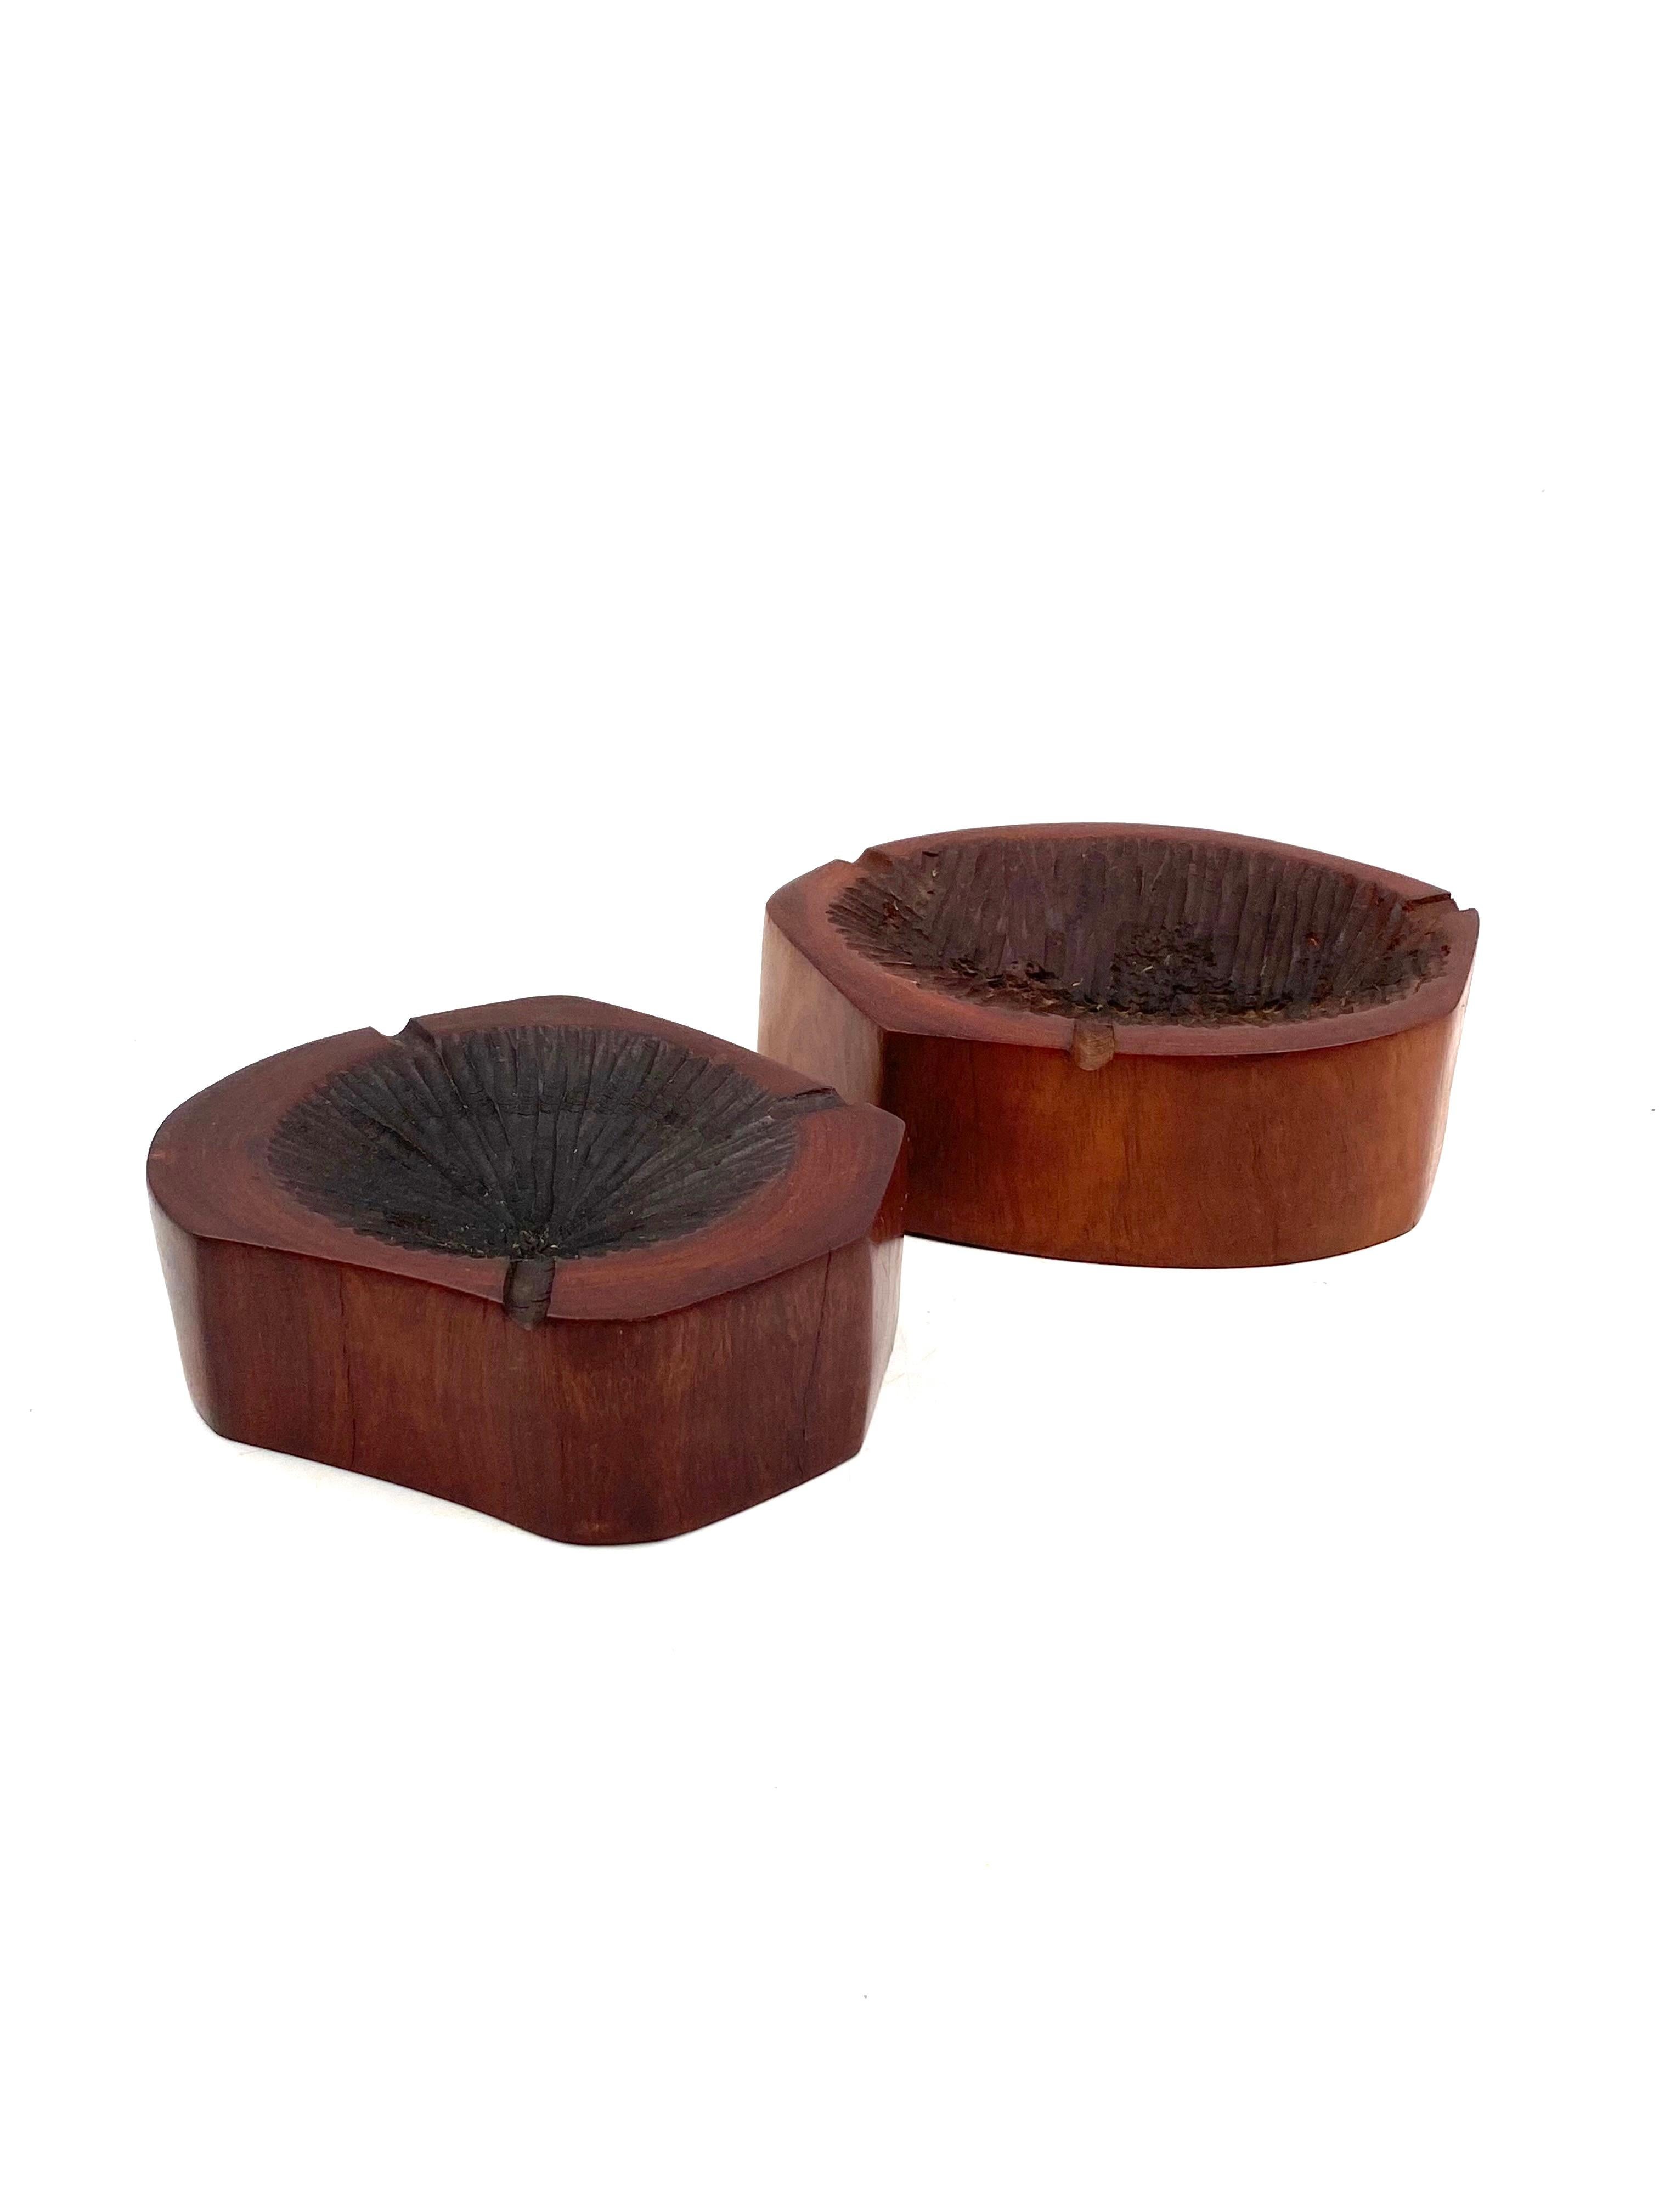 Organic modern set of 2 wood ashtrays, France 1970s For Sale 5